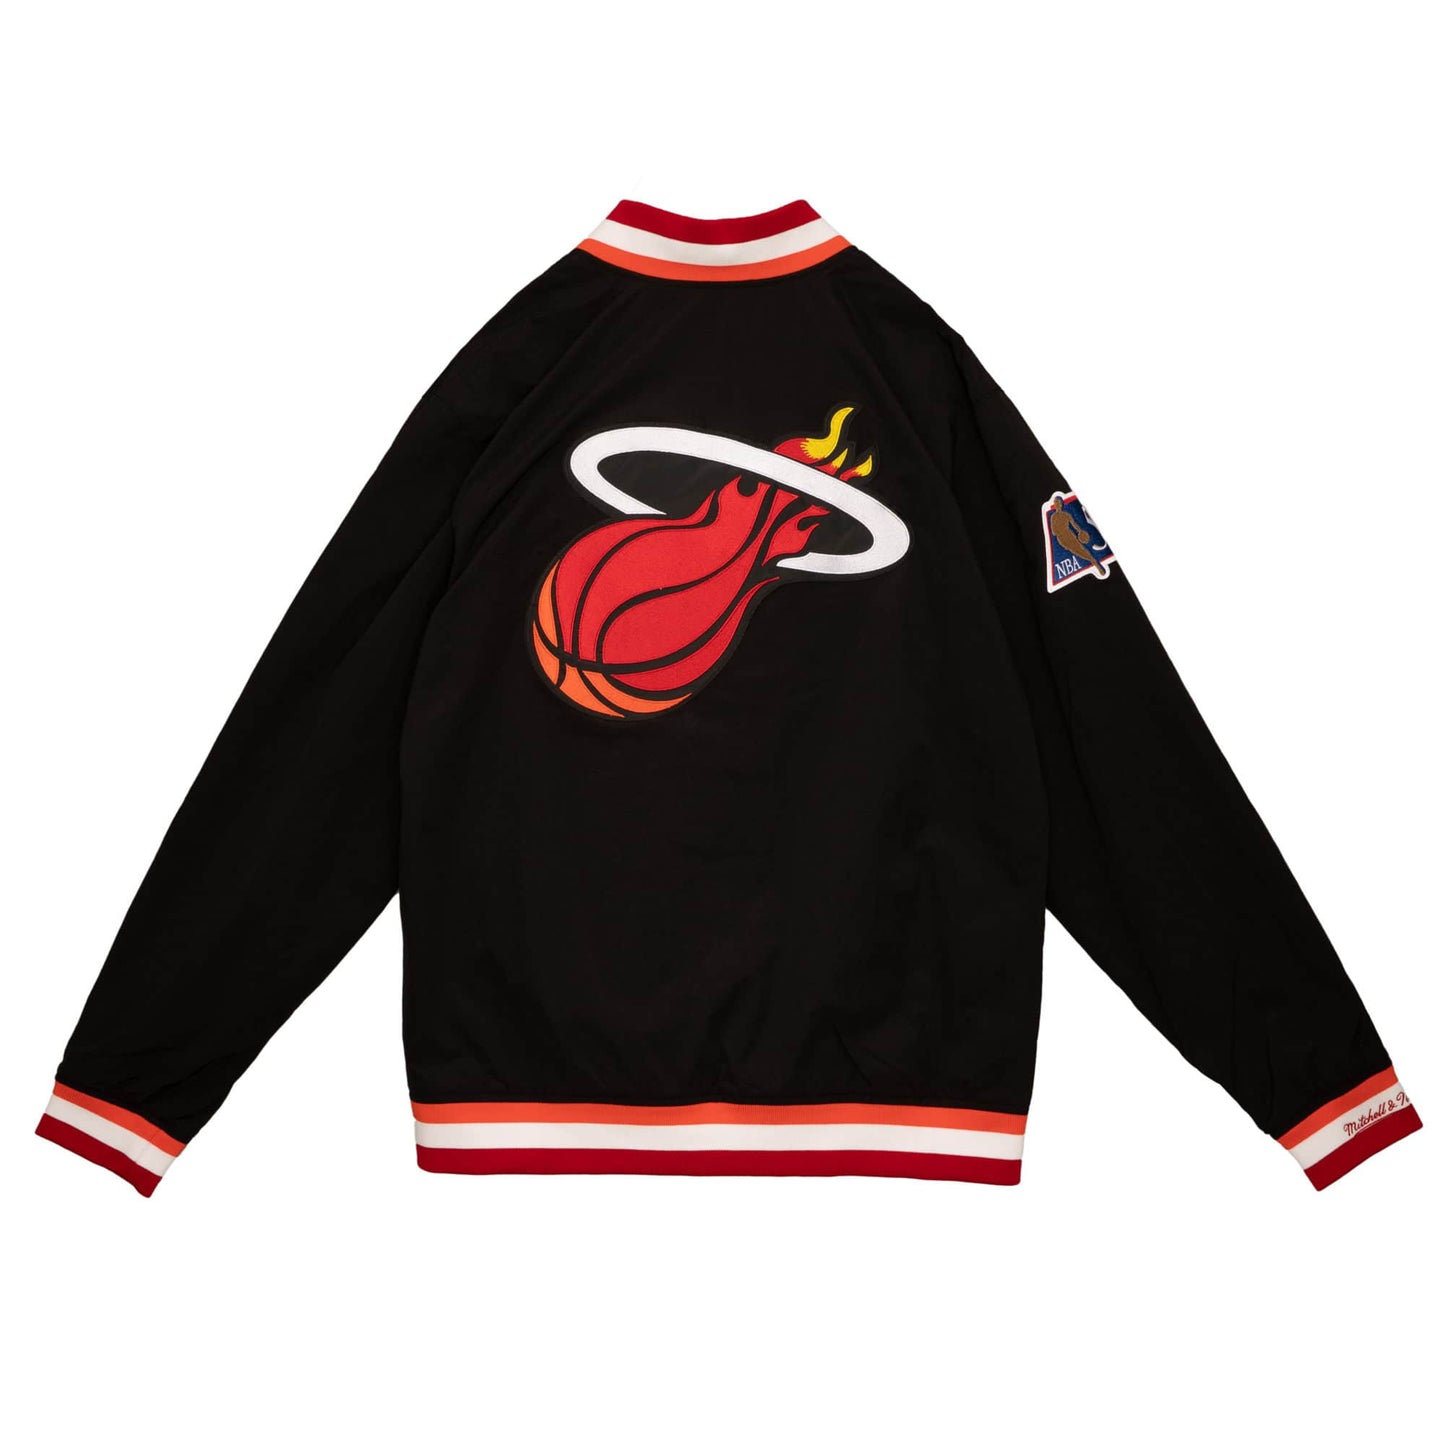 Authentic Warm Up Jacket Miami Heat 1996-97